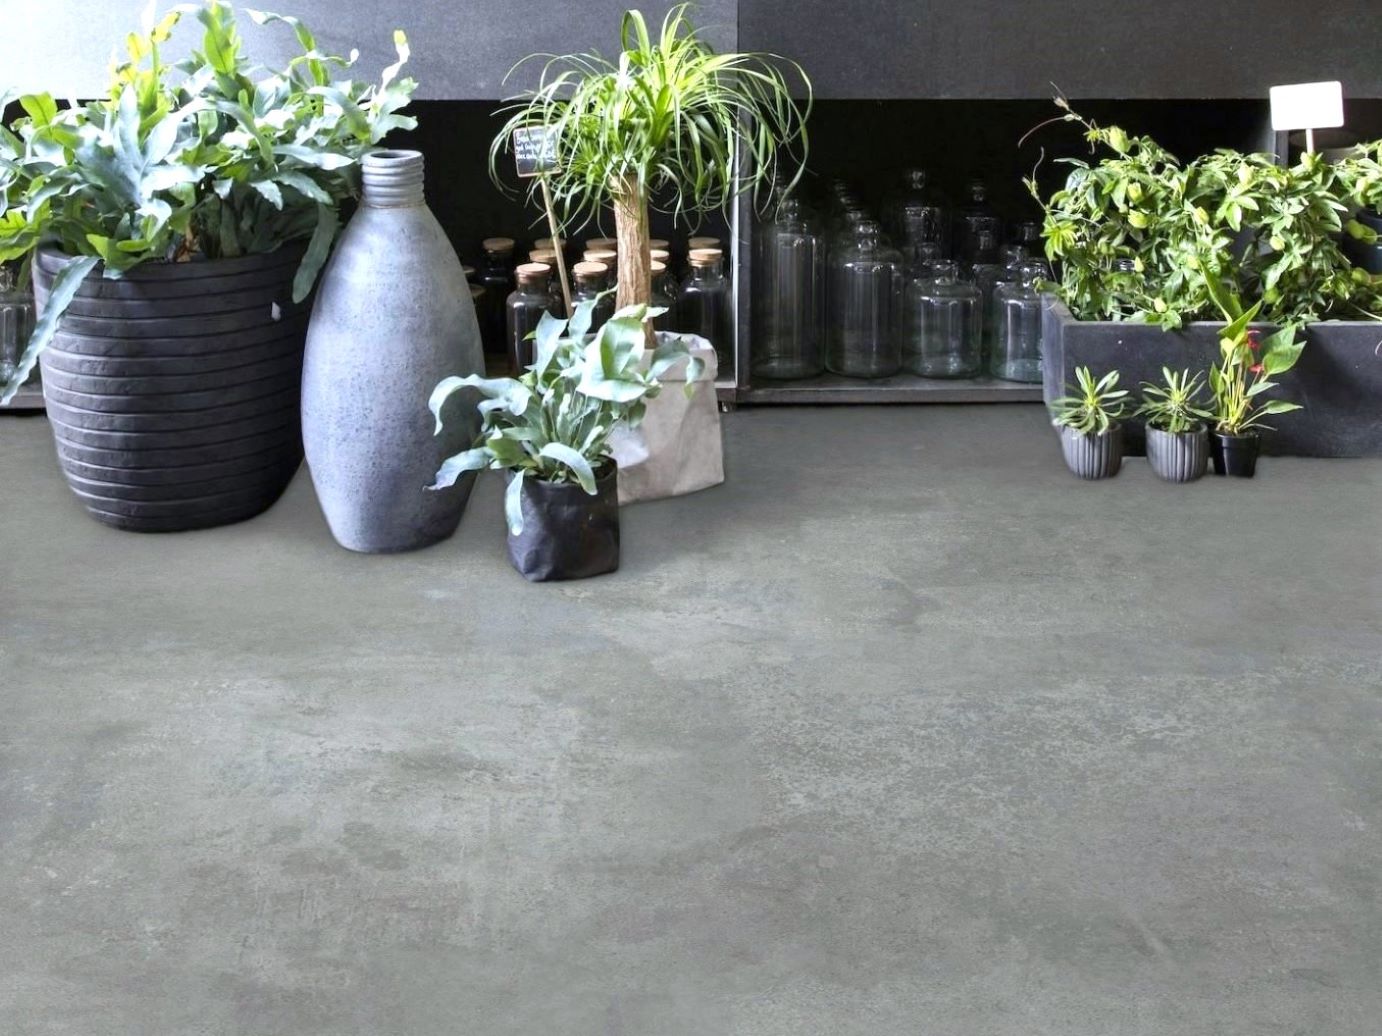 PVC flooring Vinyl flooring in grey concrete style